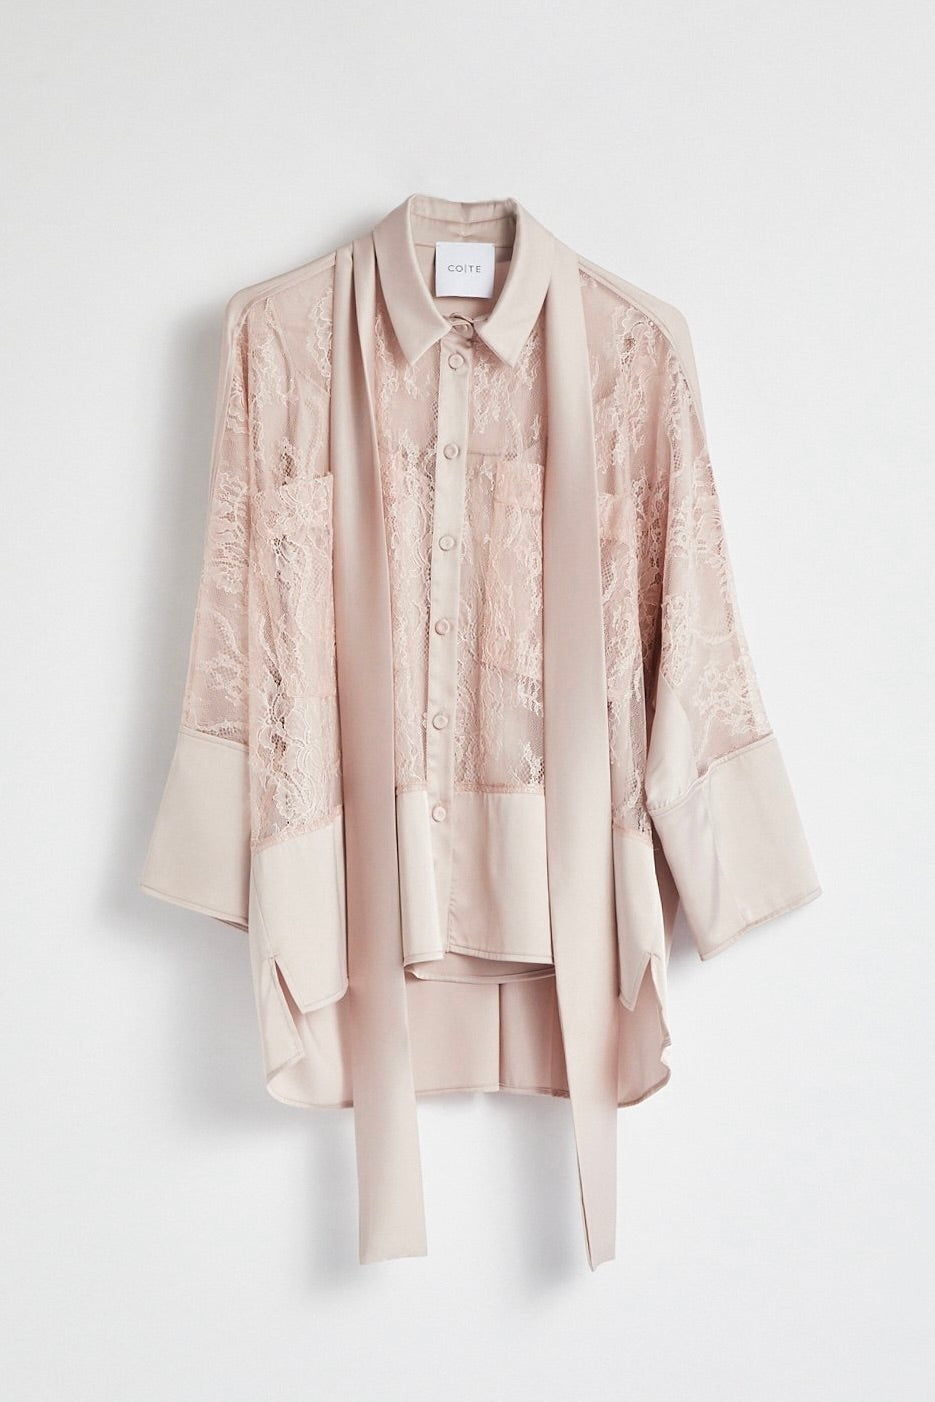 CO|TE - Charlotte Shirt: Pale Pink